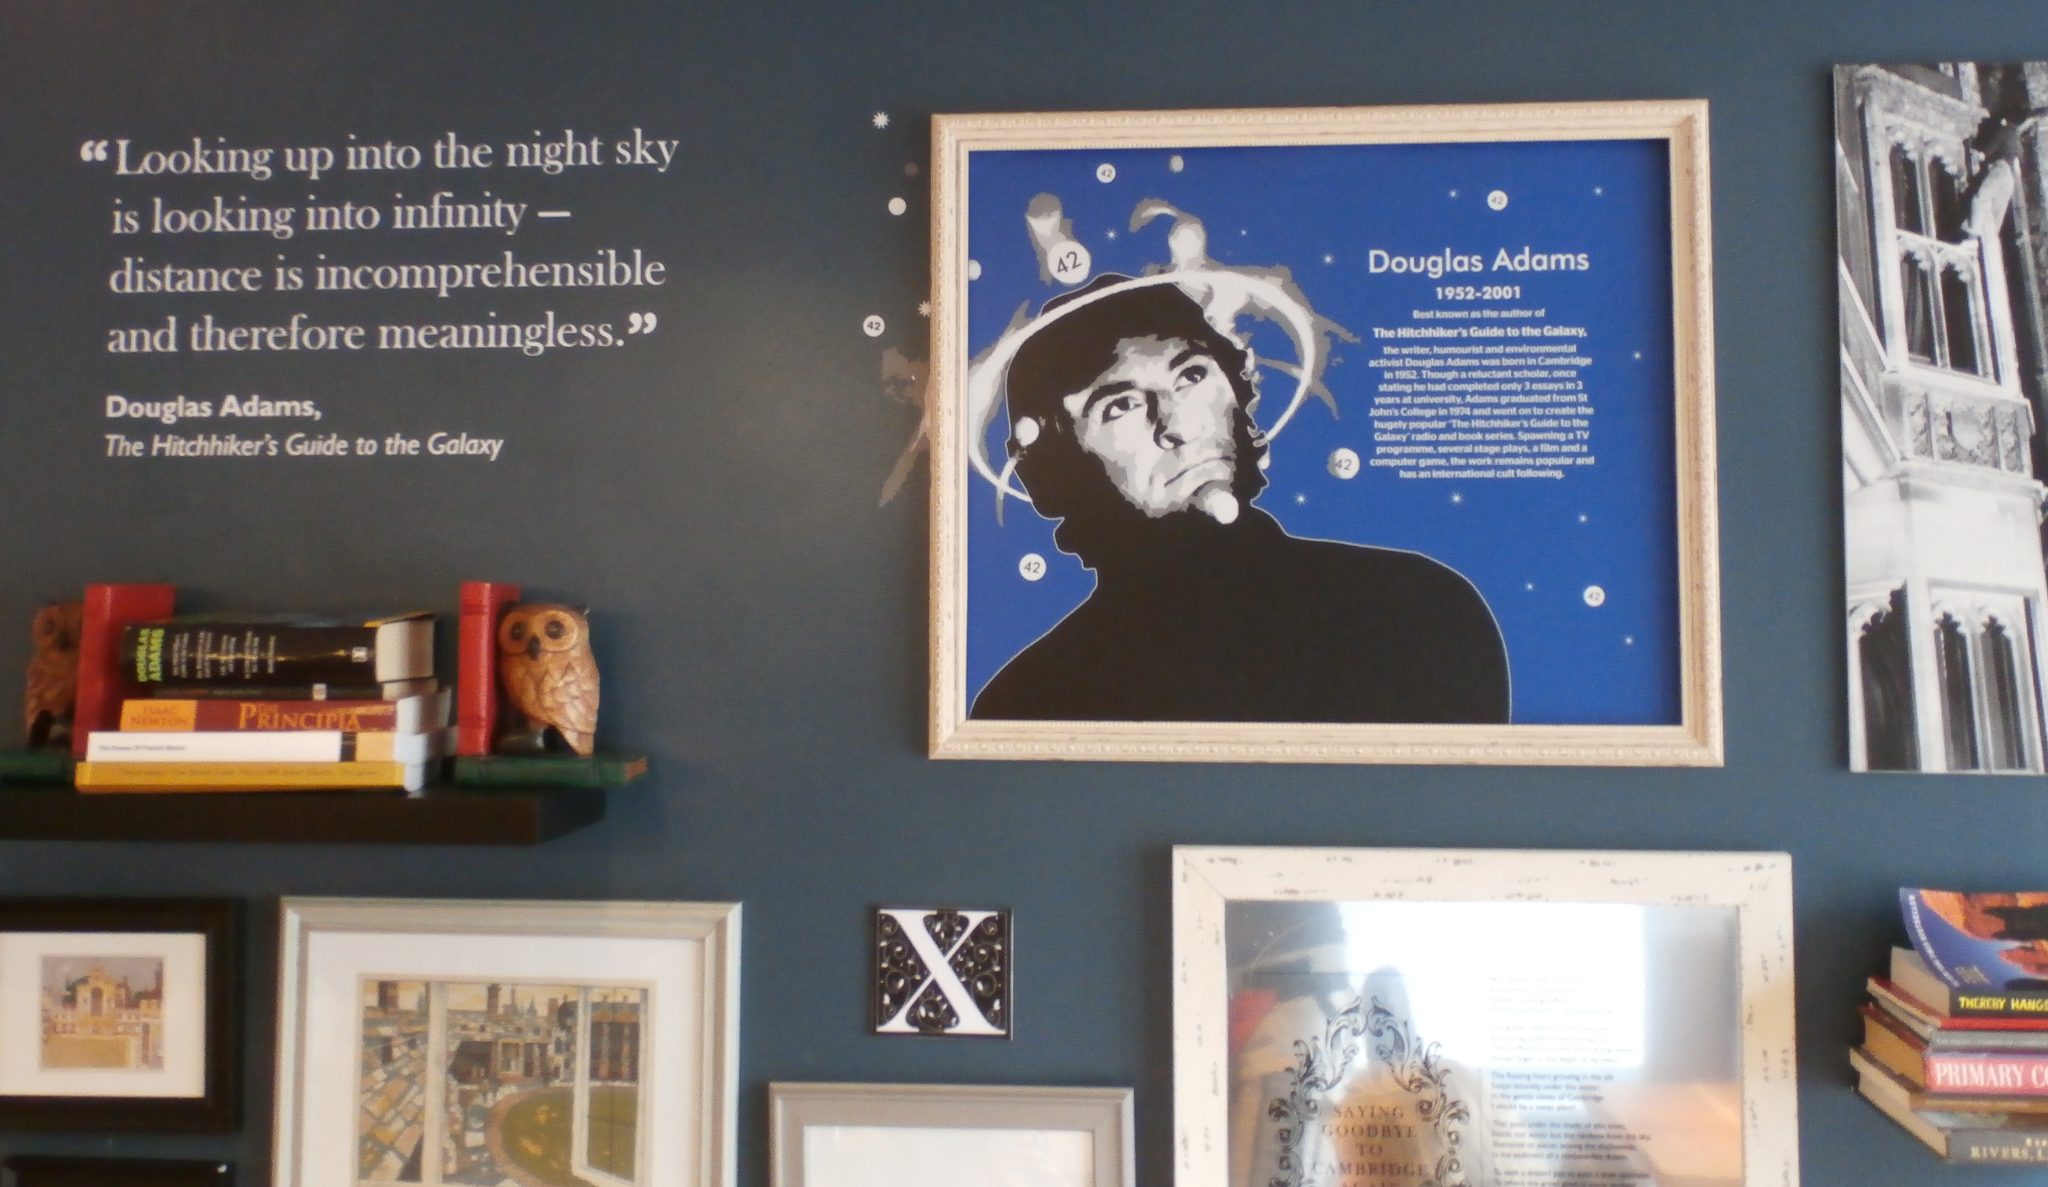 The Douglas Adams' display at the YHA hostel in Cambridge